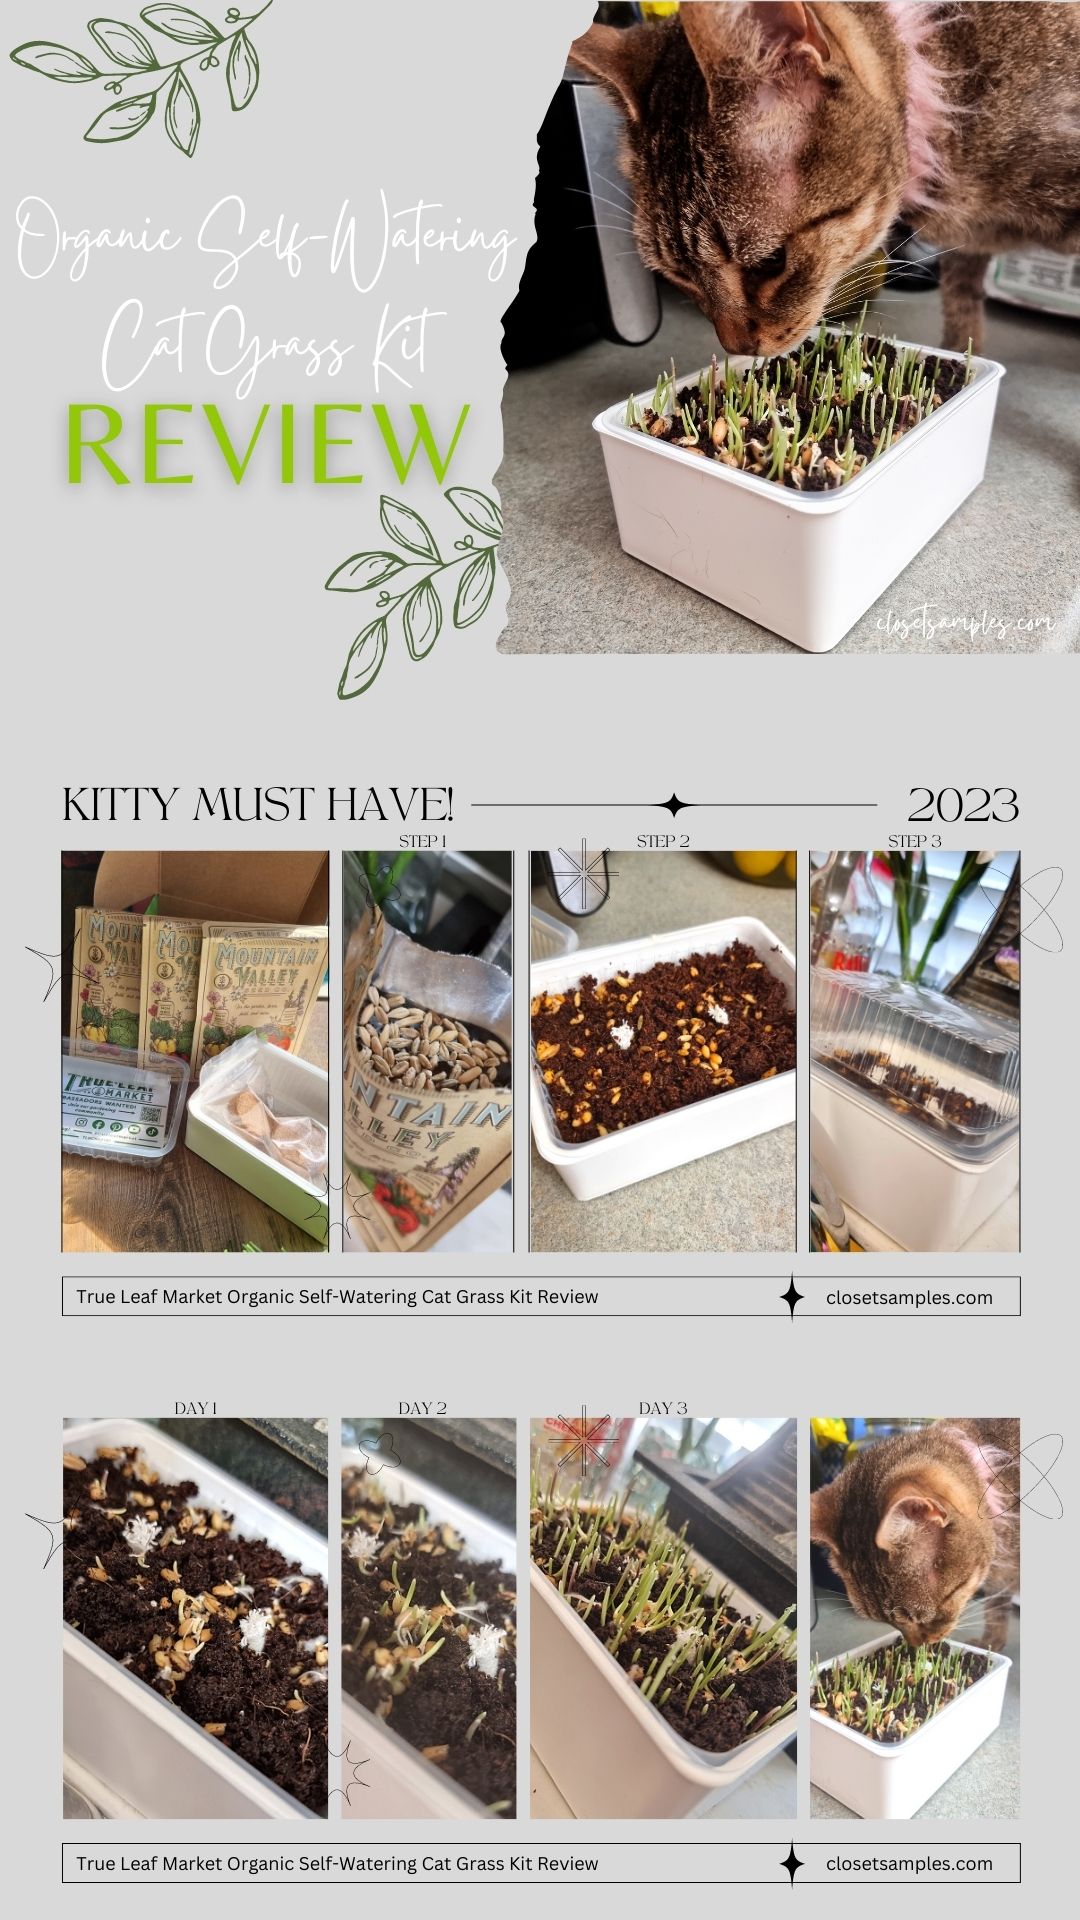 True Leaf Market Organic Self Watering Cat Grass Kit Review closetsamples Pinterest